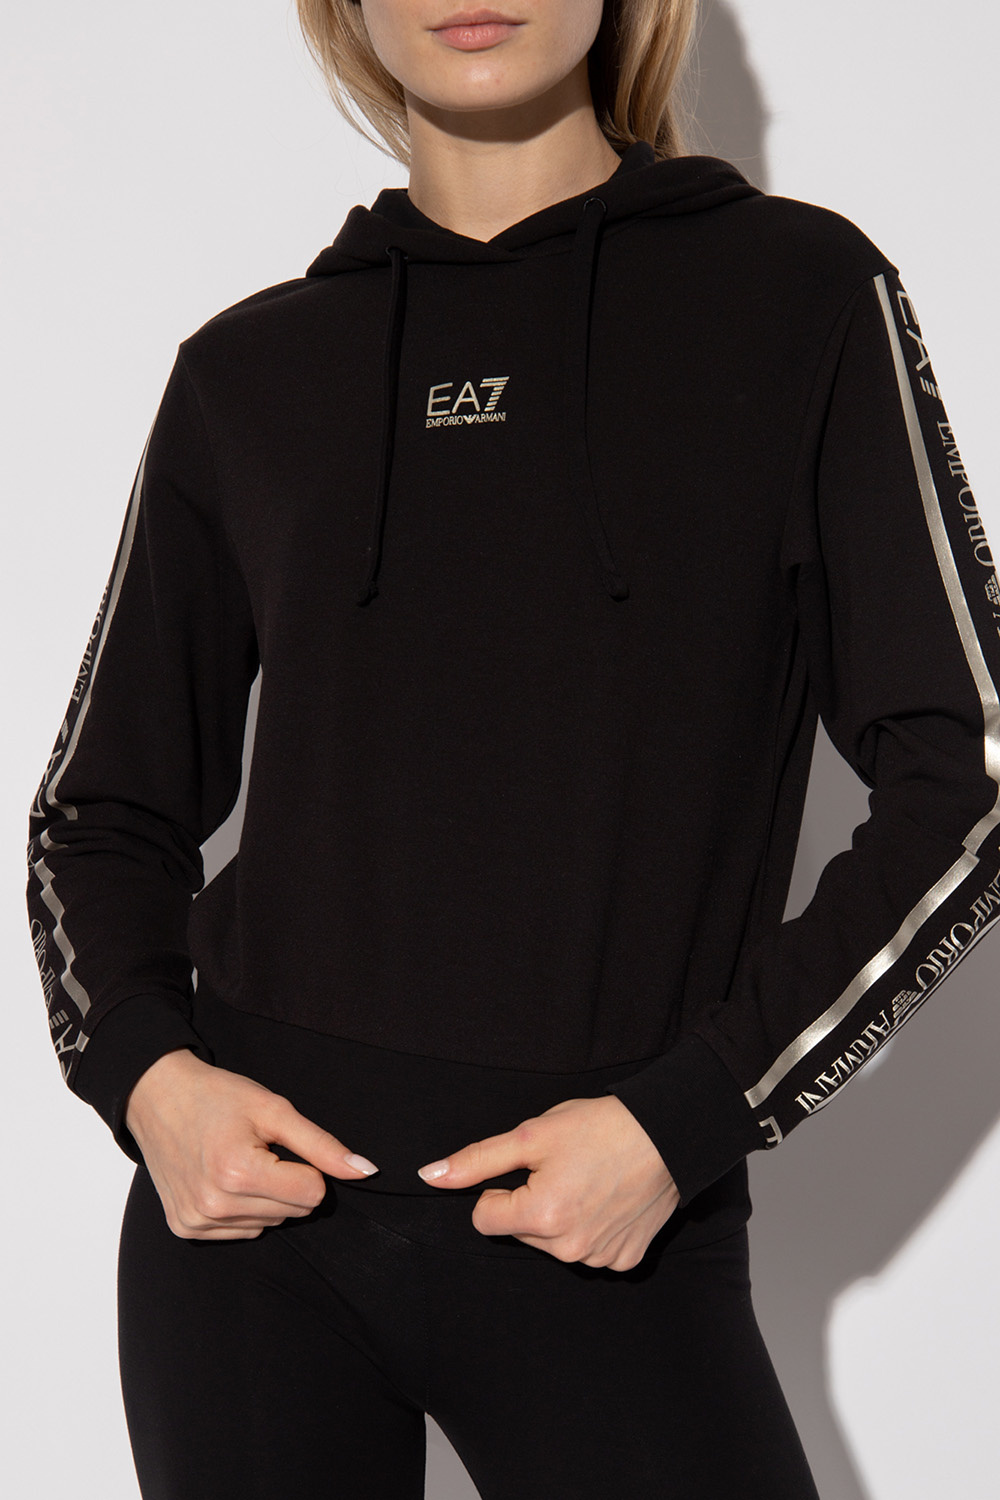 EA7 Emporio Armani Printed hoodie